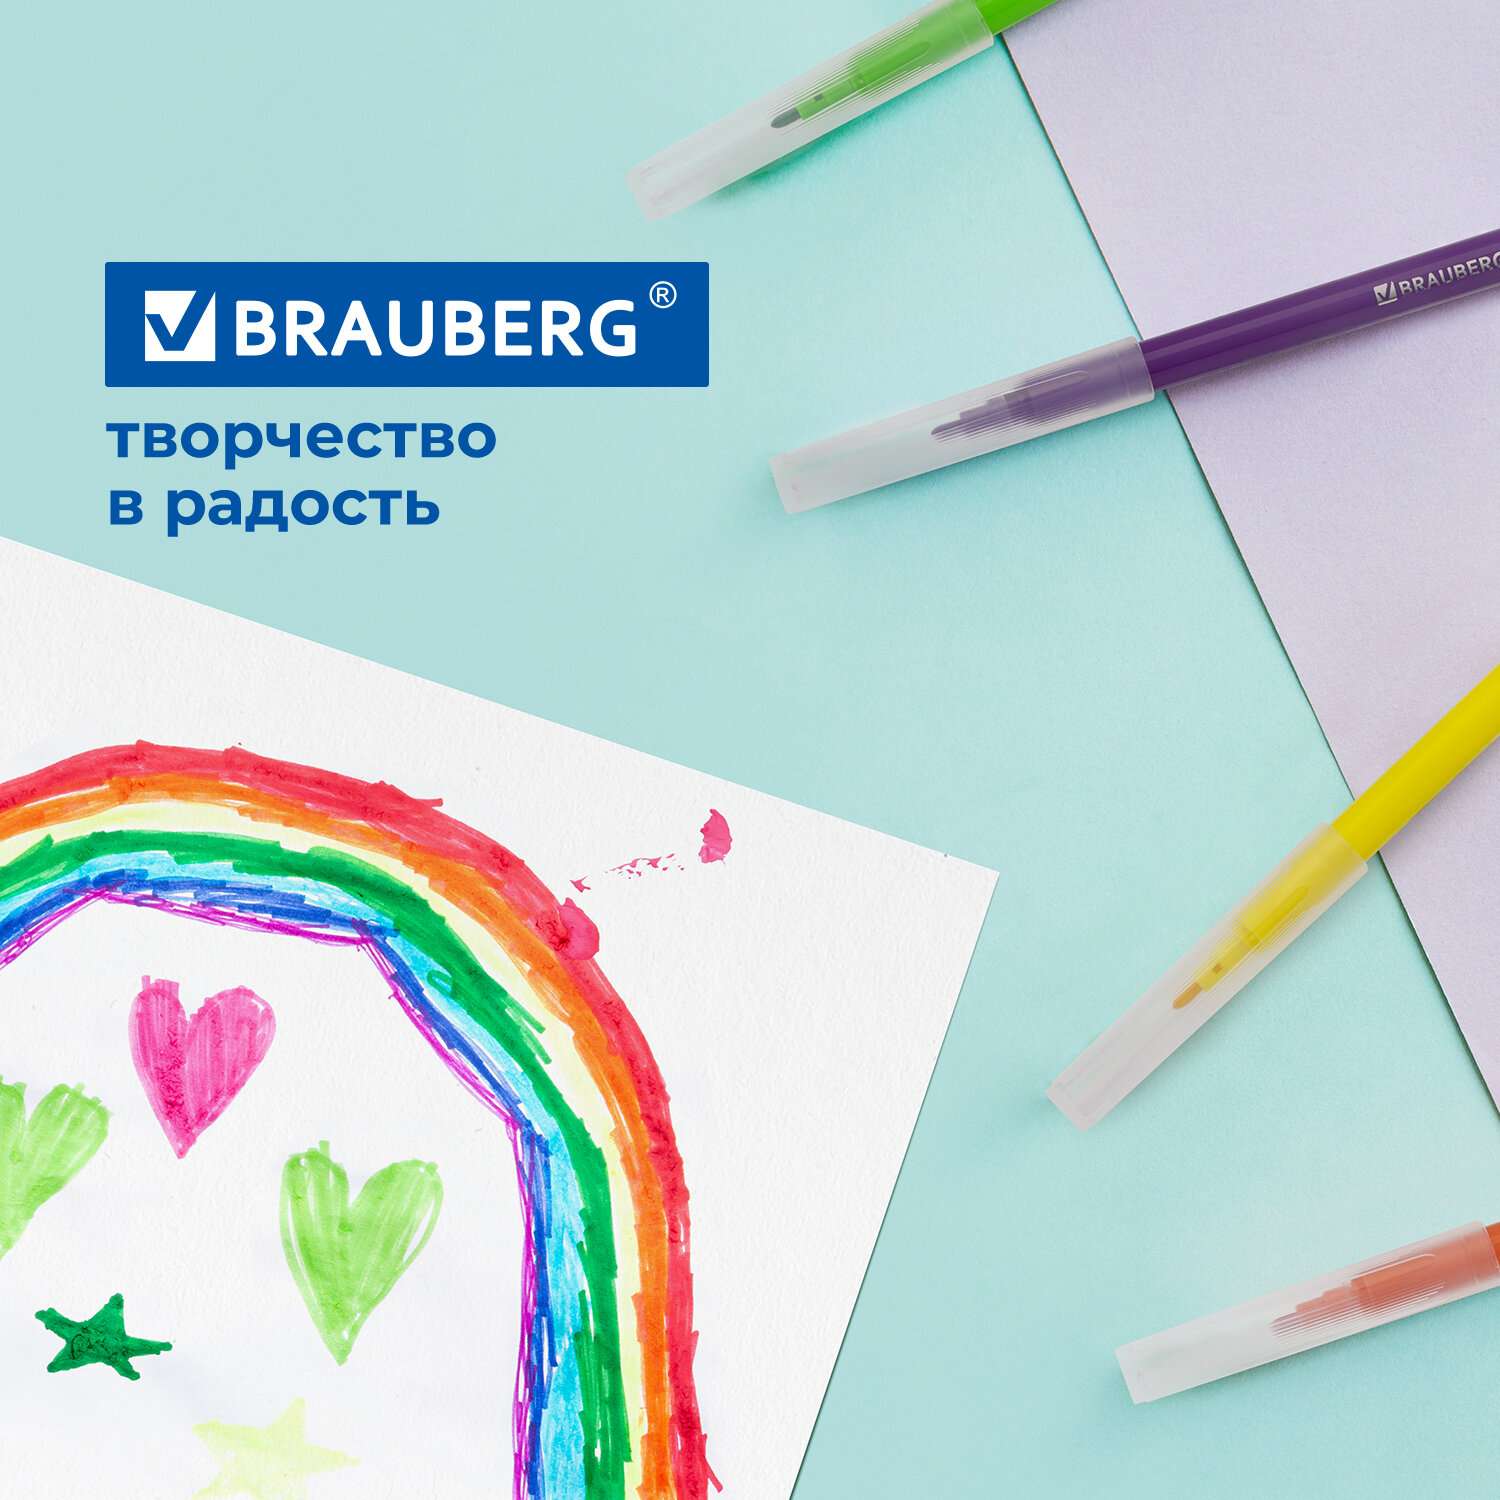 Фломастеры Brauberg Premium 24 цвета ультра-смываемые - фото 13